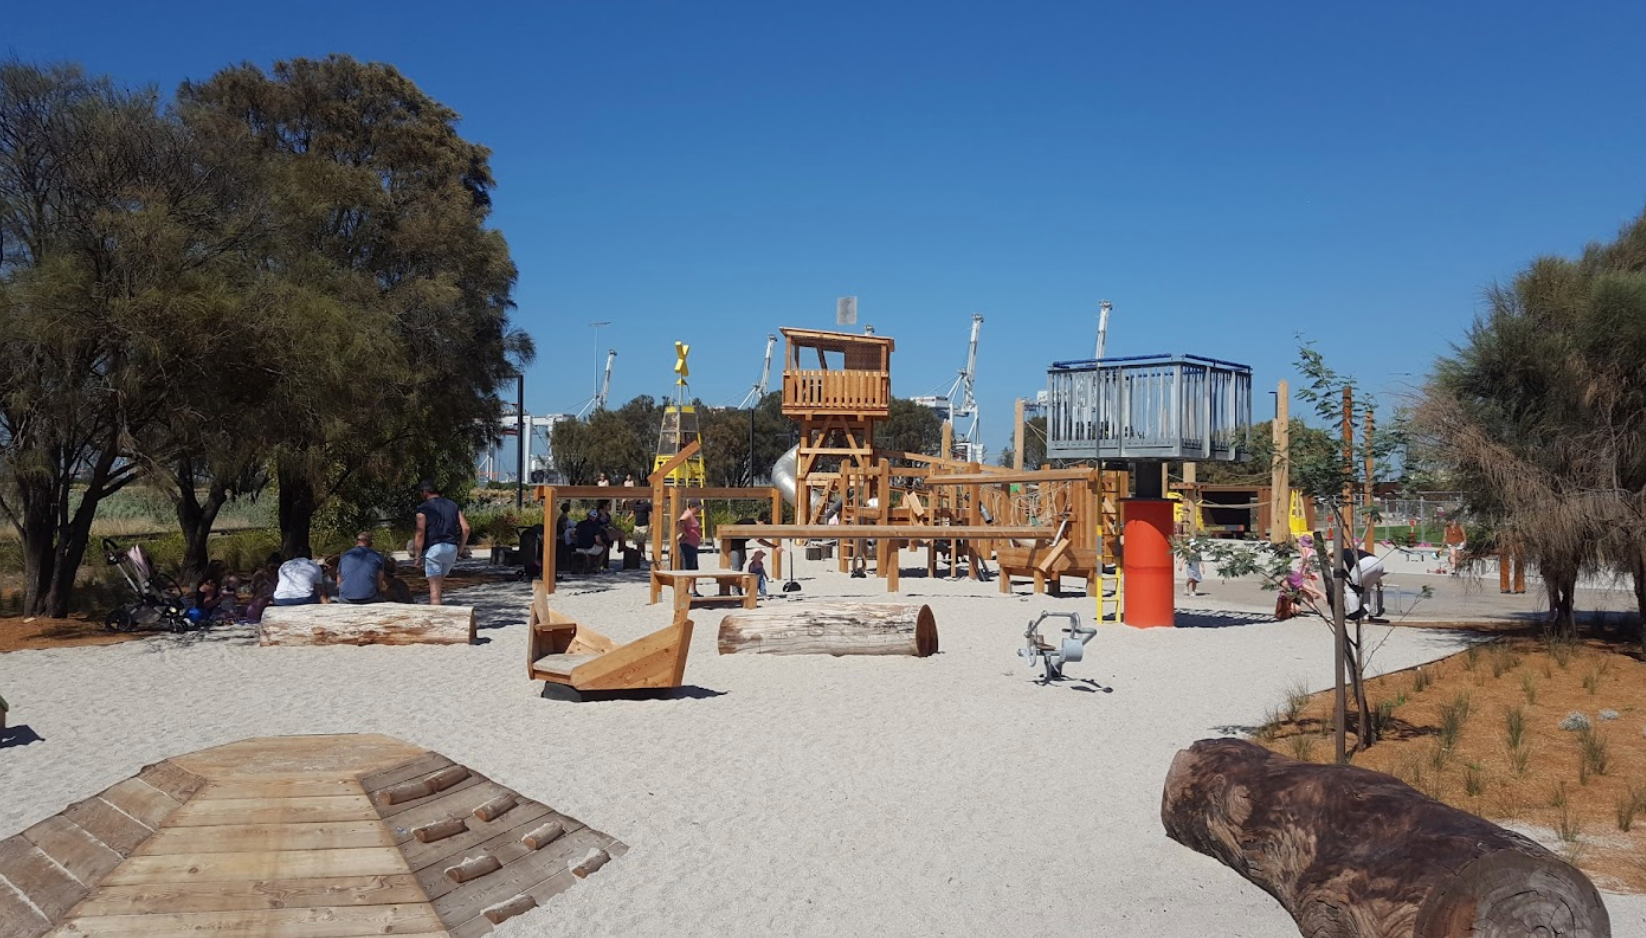 Maritime Cove Community Park Playground